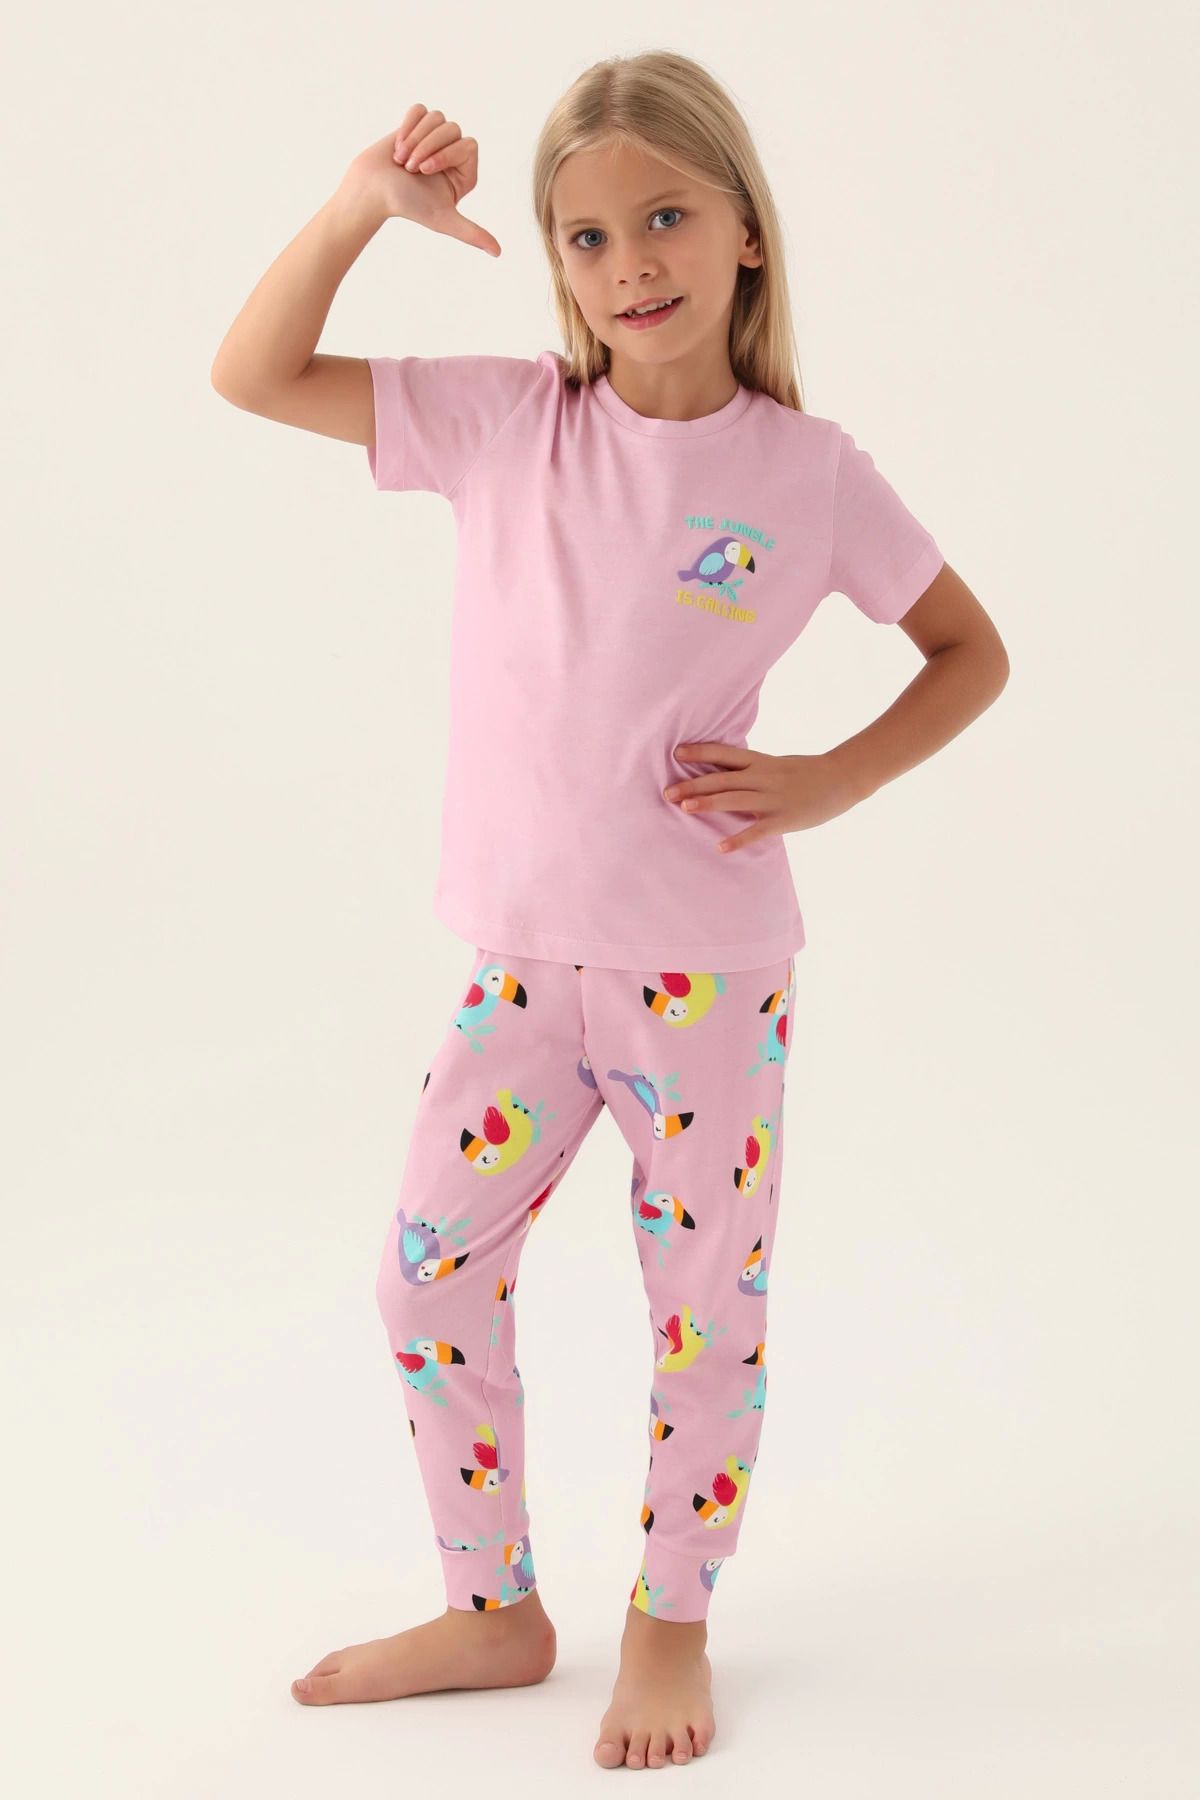 Pierre Cardin Roly Poly 3403-g Kız Çocuk Kısa Kol Pijama Takımı